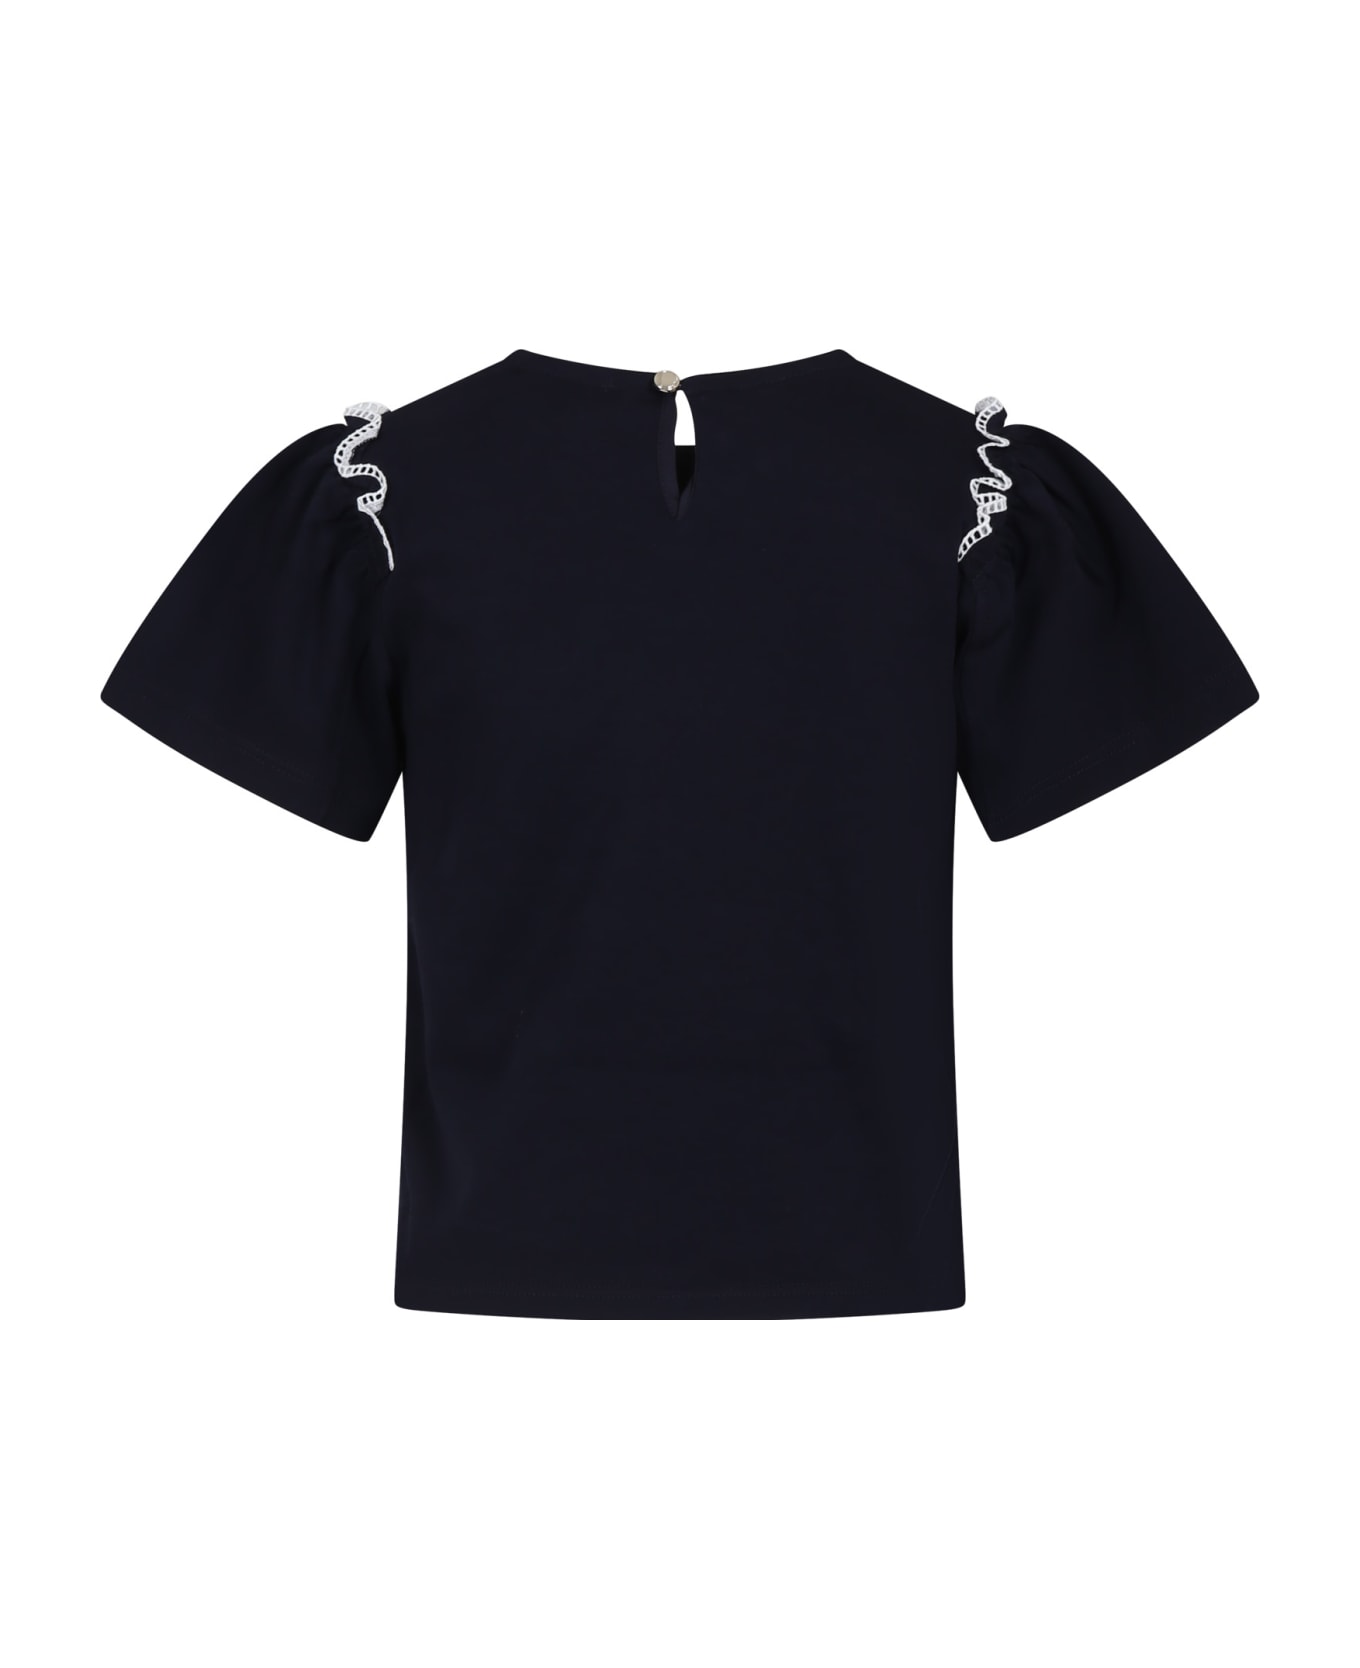 Chloé Blue T-shirt For Girl With Logo - Marine